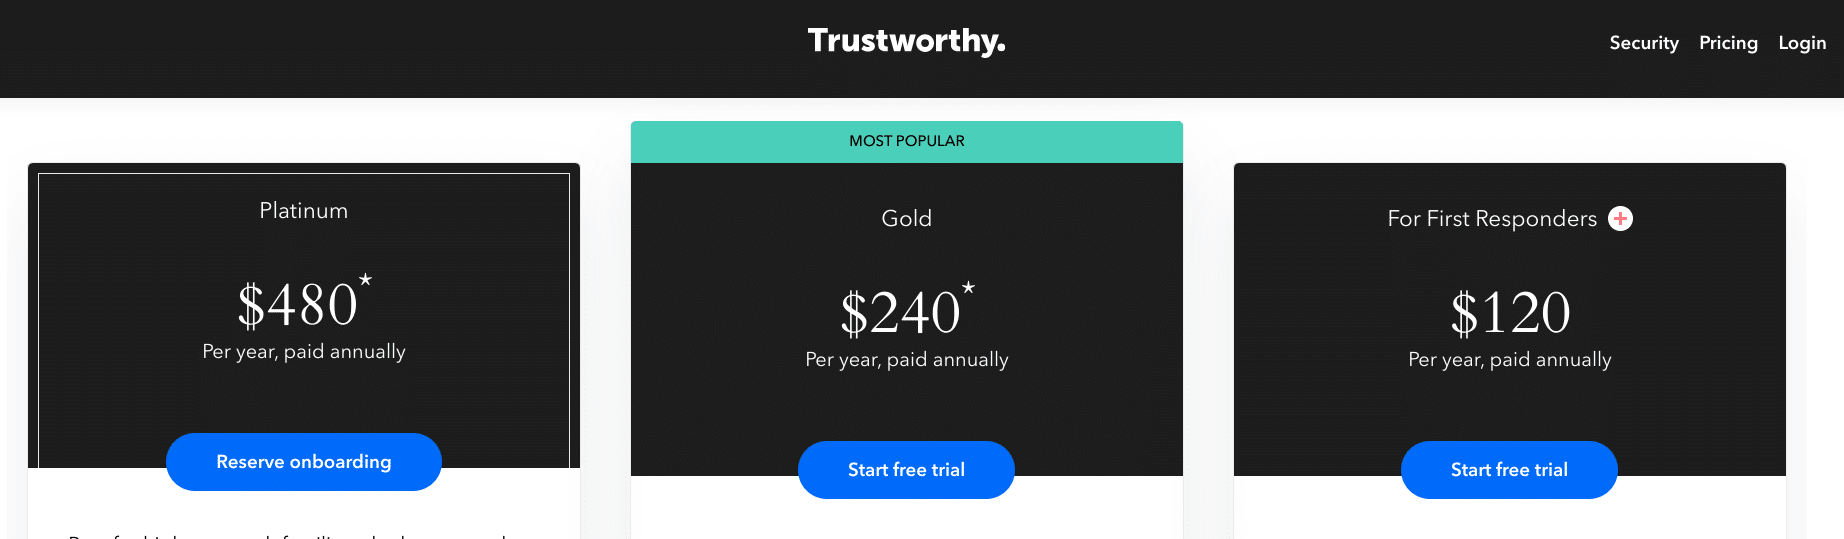 Trustworthy pricing